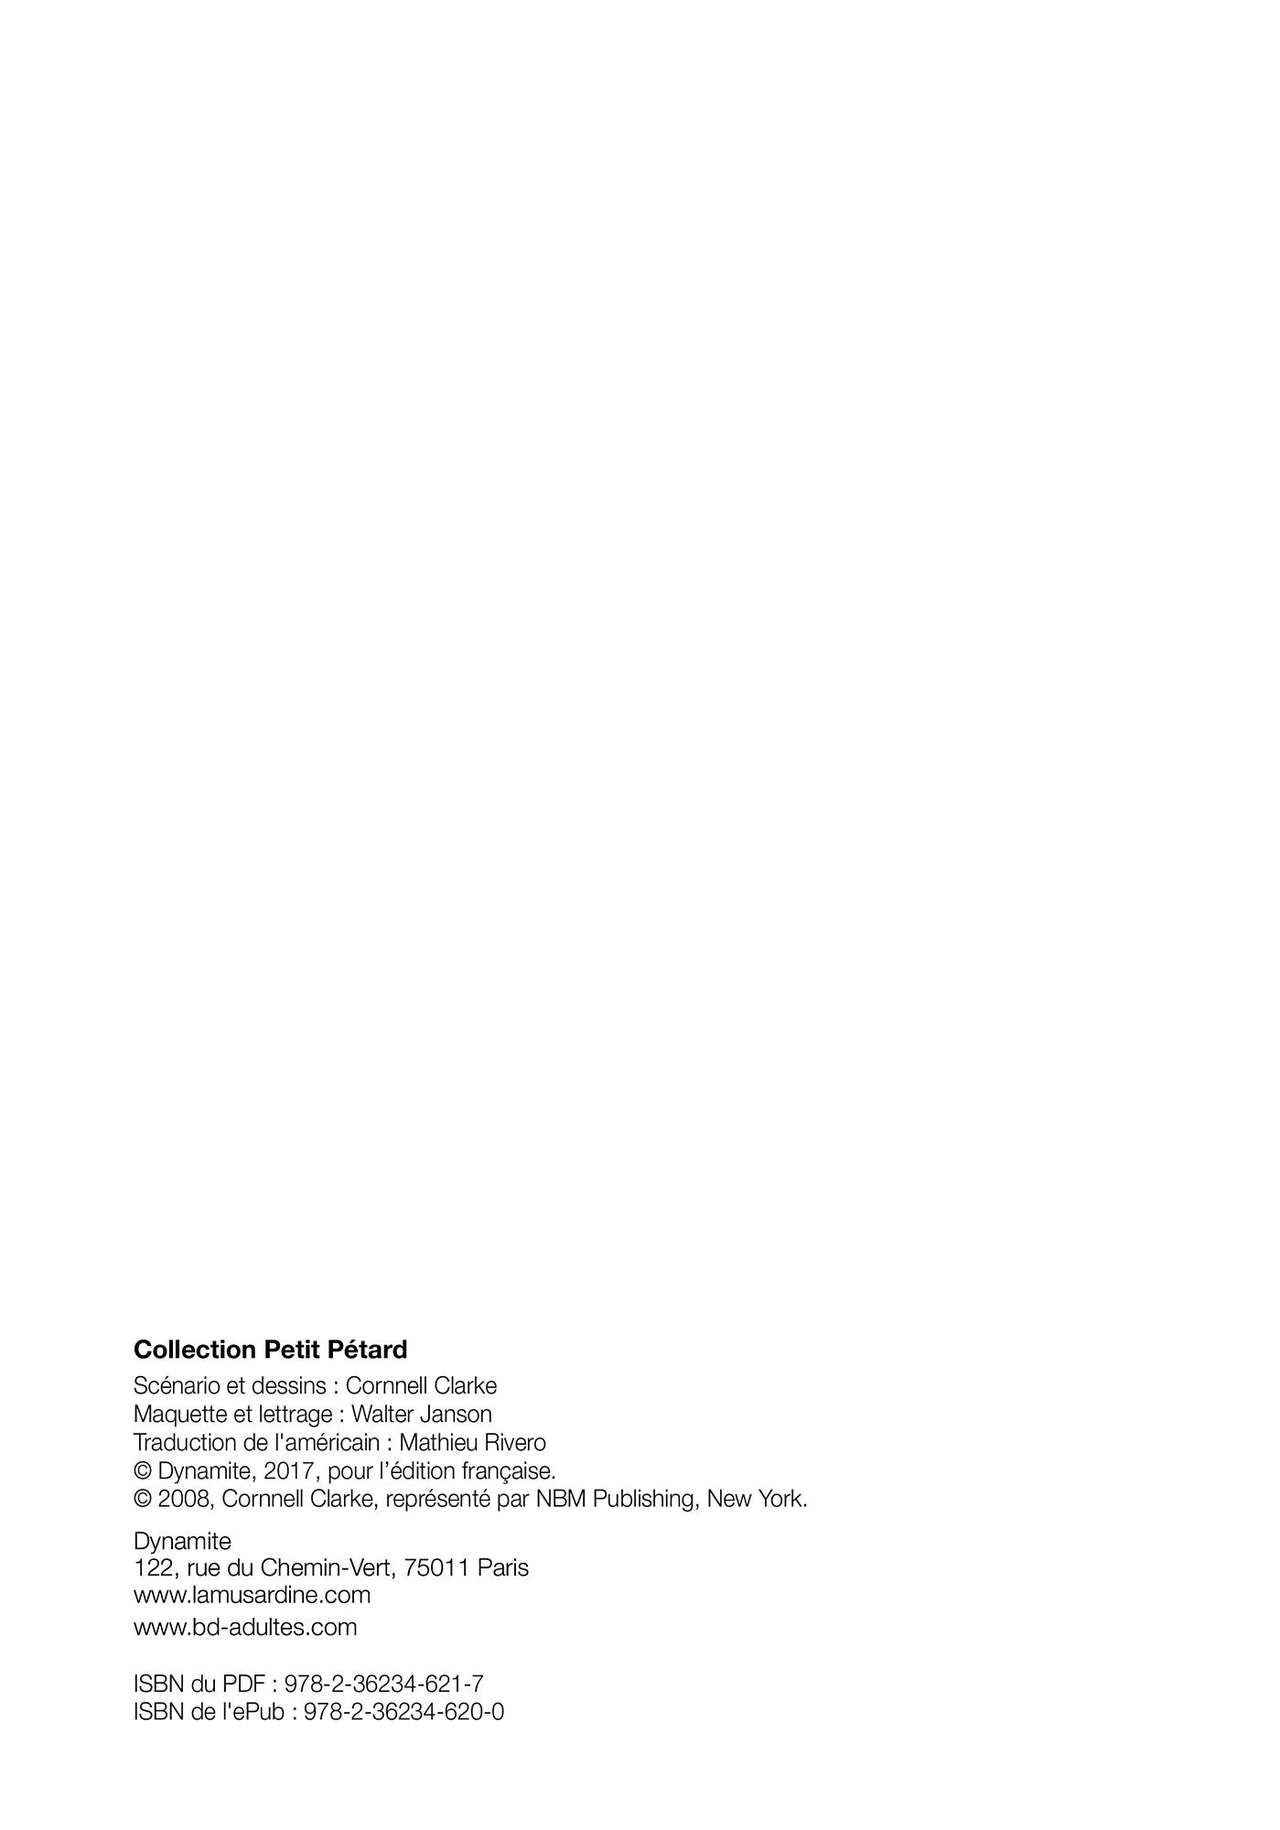 Peanut Butter - Le journal de Molly Fredrickson - Volume 3 numero d'image 3